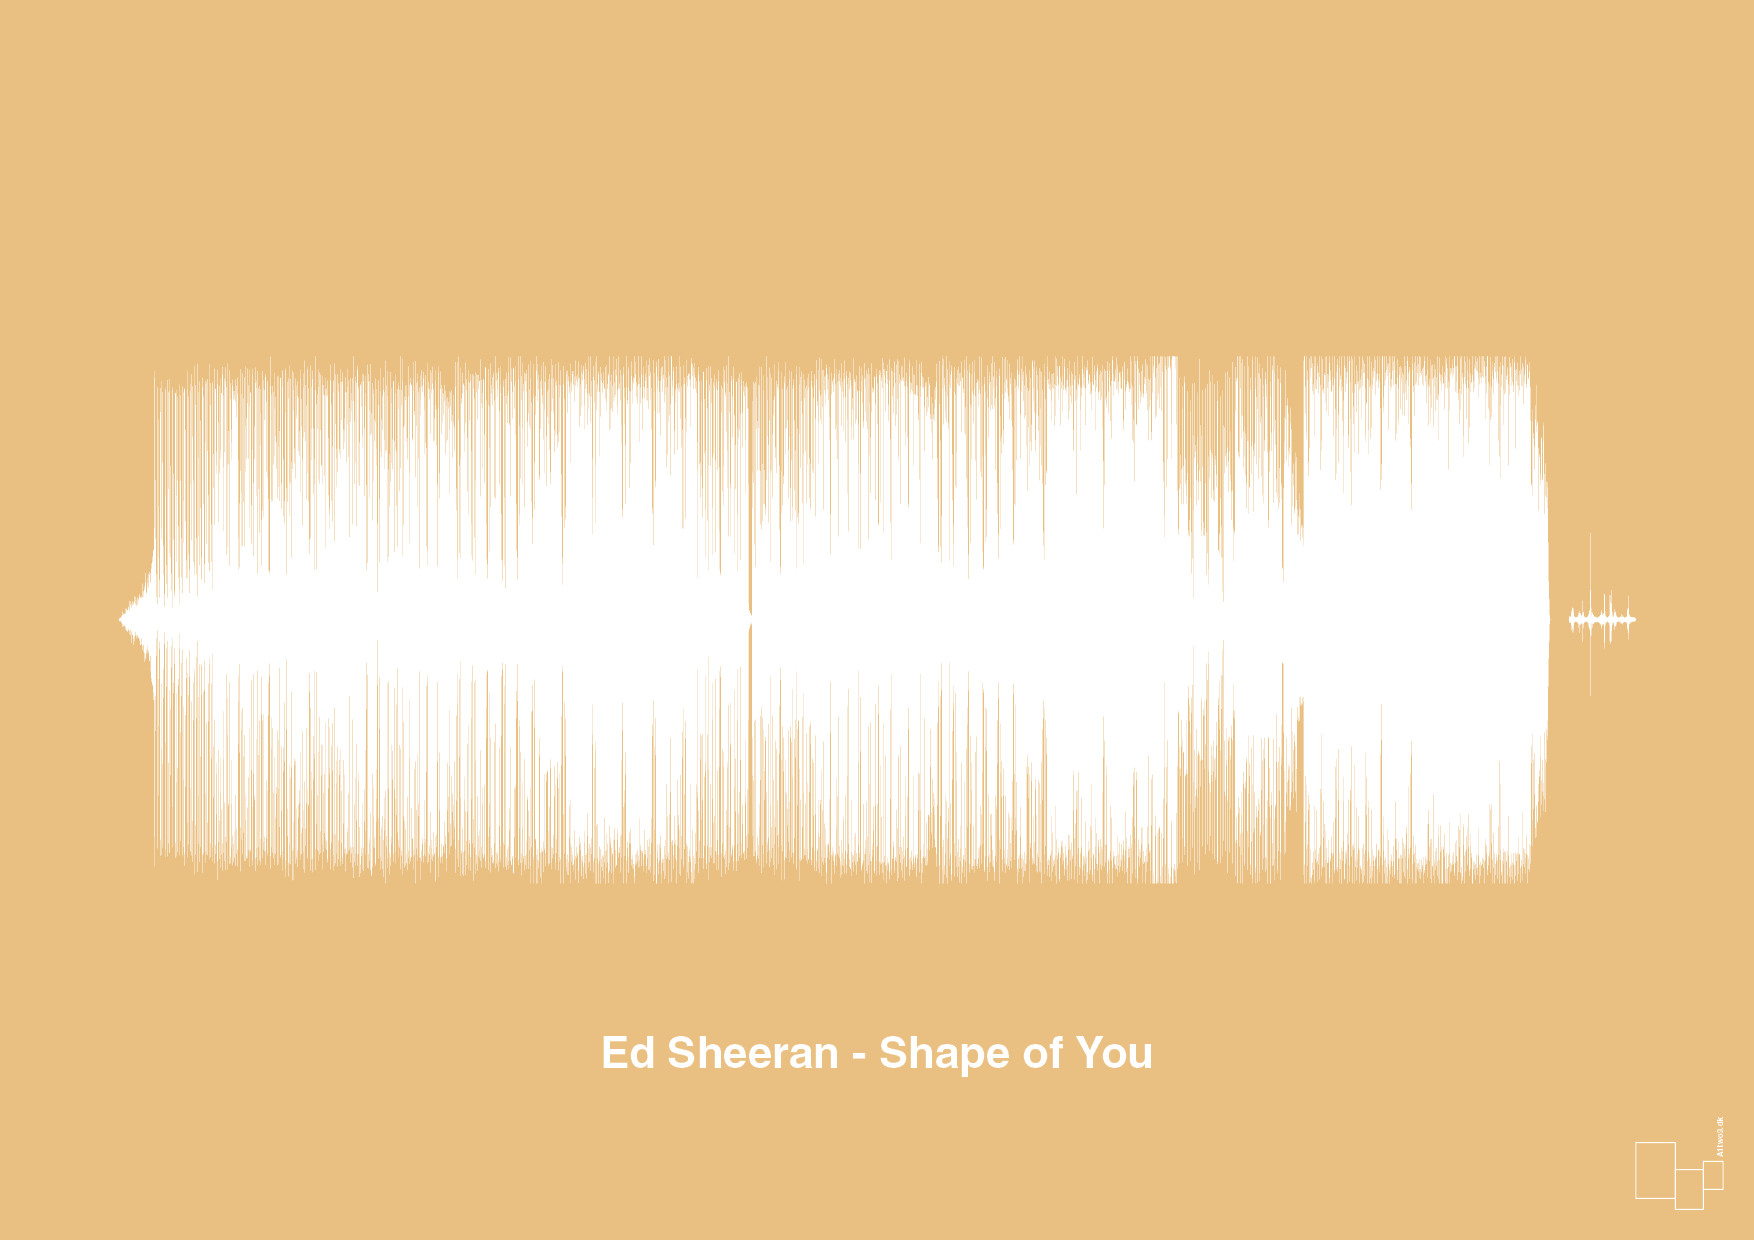 ed sheeran - shape of you - Plakat med Musik i Charismatic